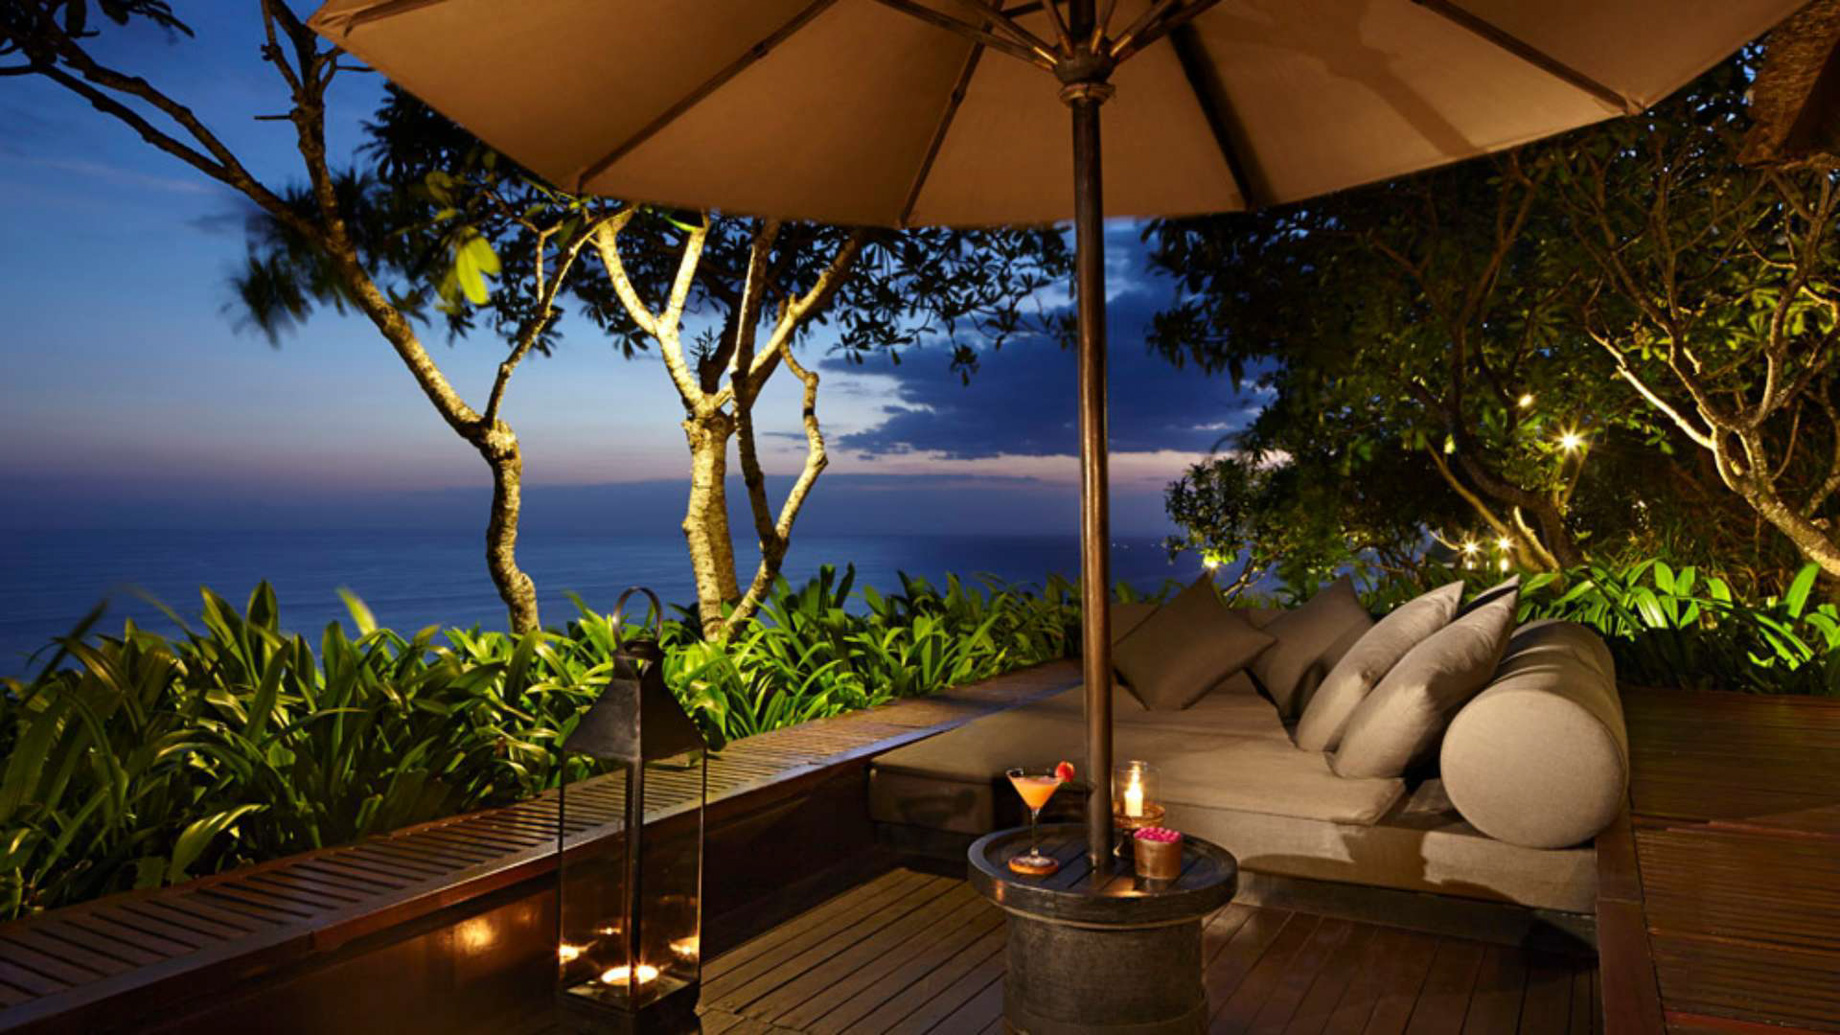 Bvlgari Resort Bali - Uluwatu, Bali, Indonesia - Ocean View Lounge Deck Night